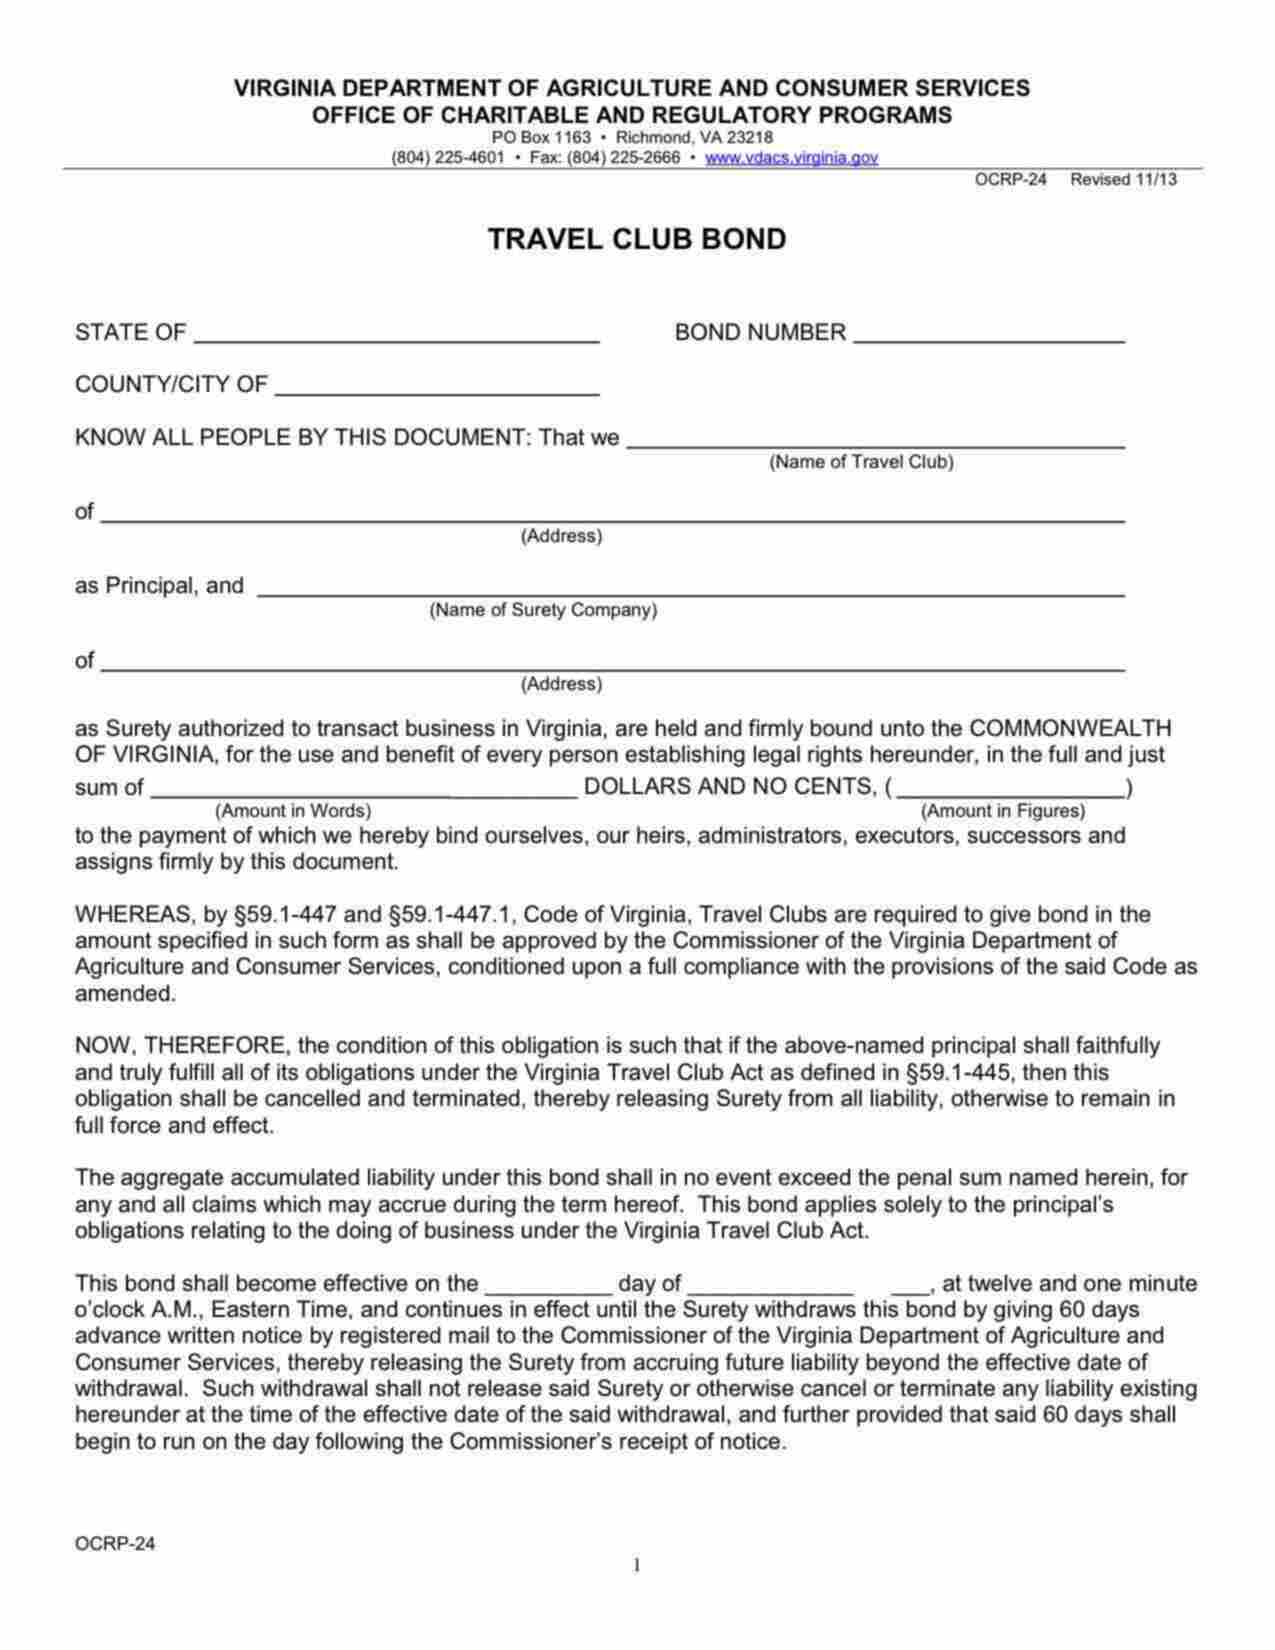 Virginia Travel Club Bond Form